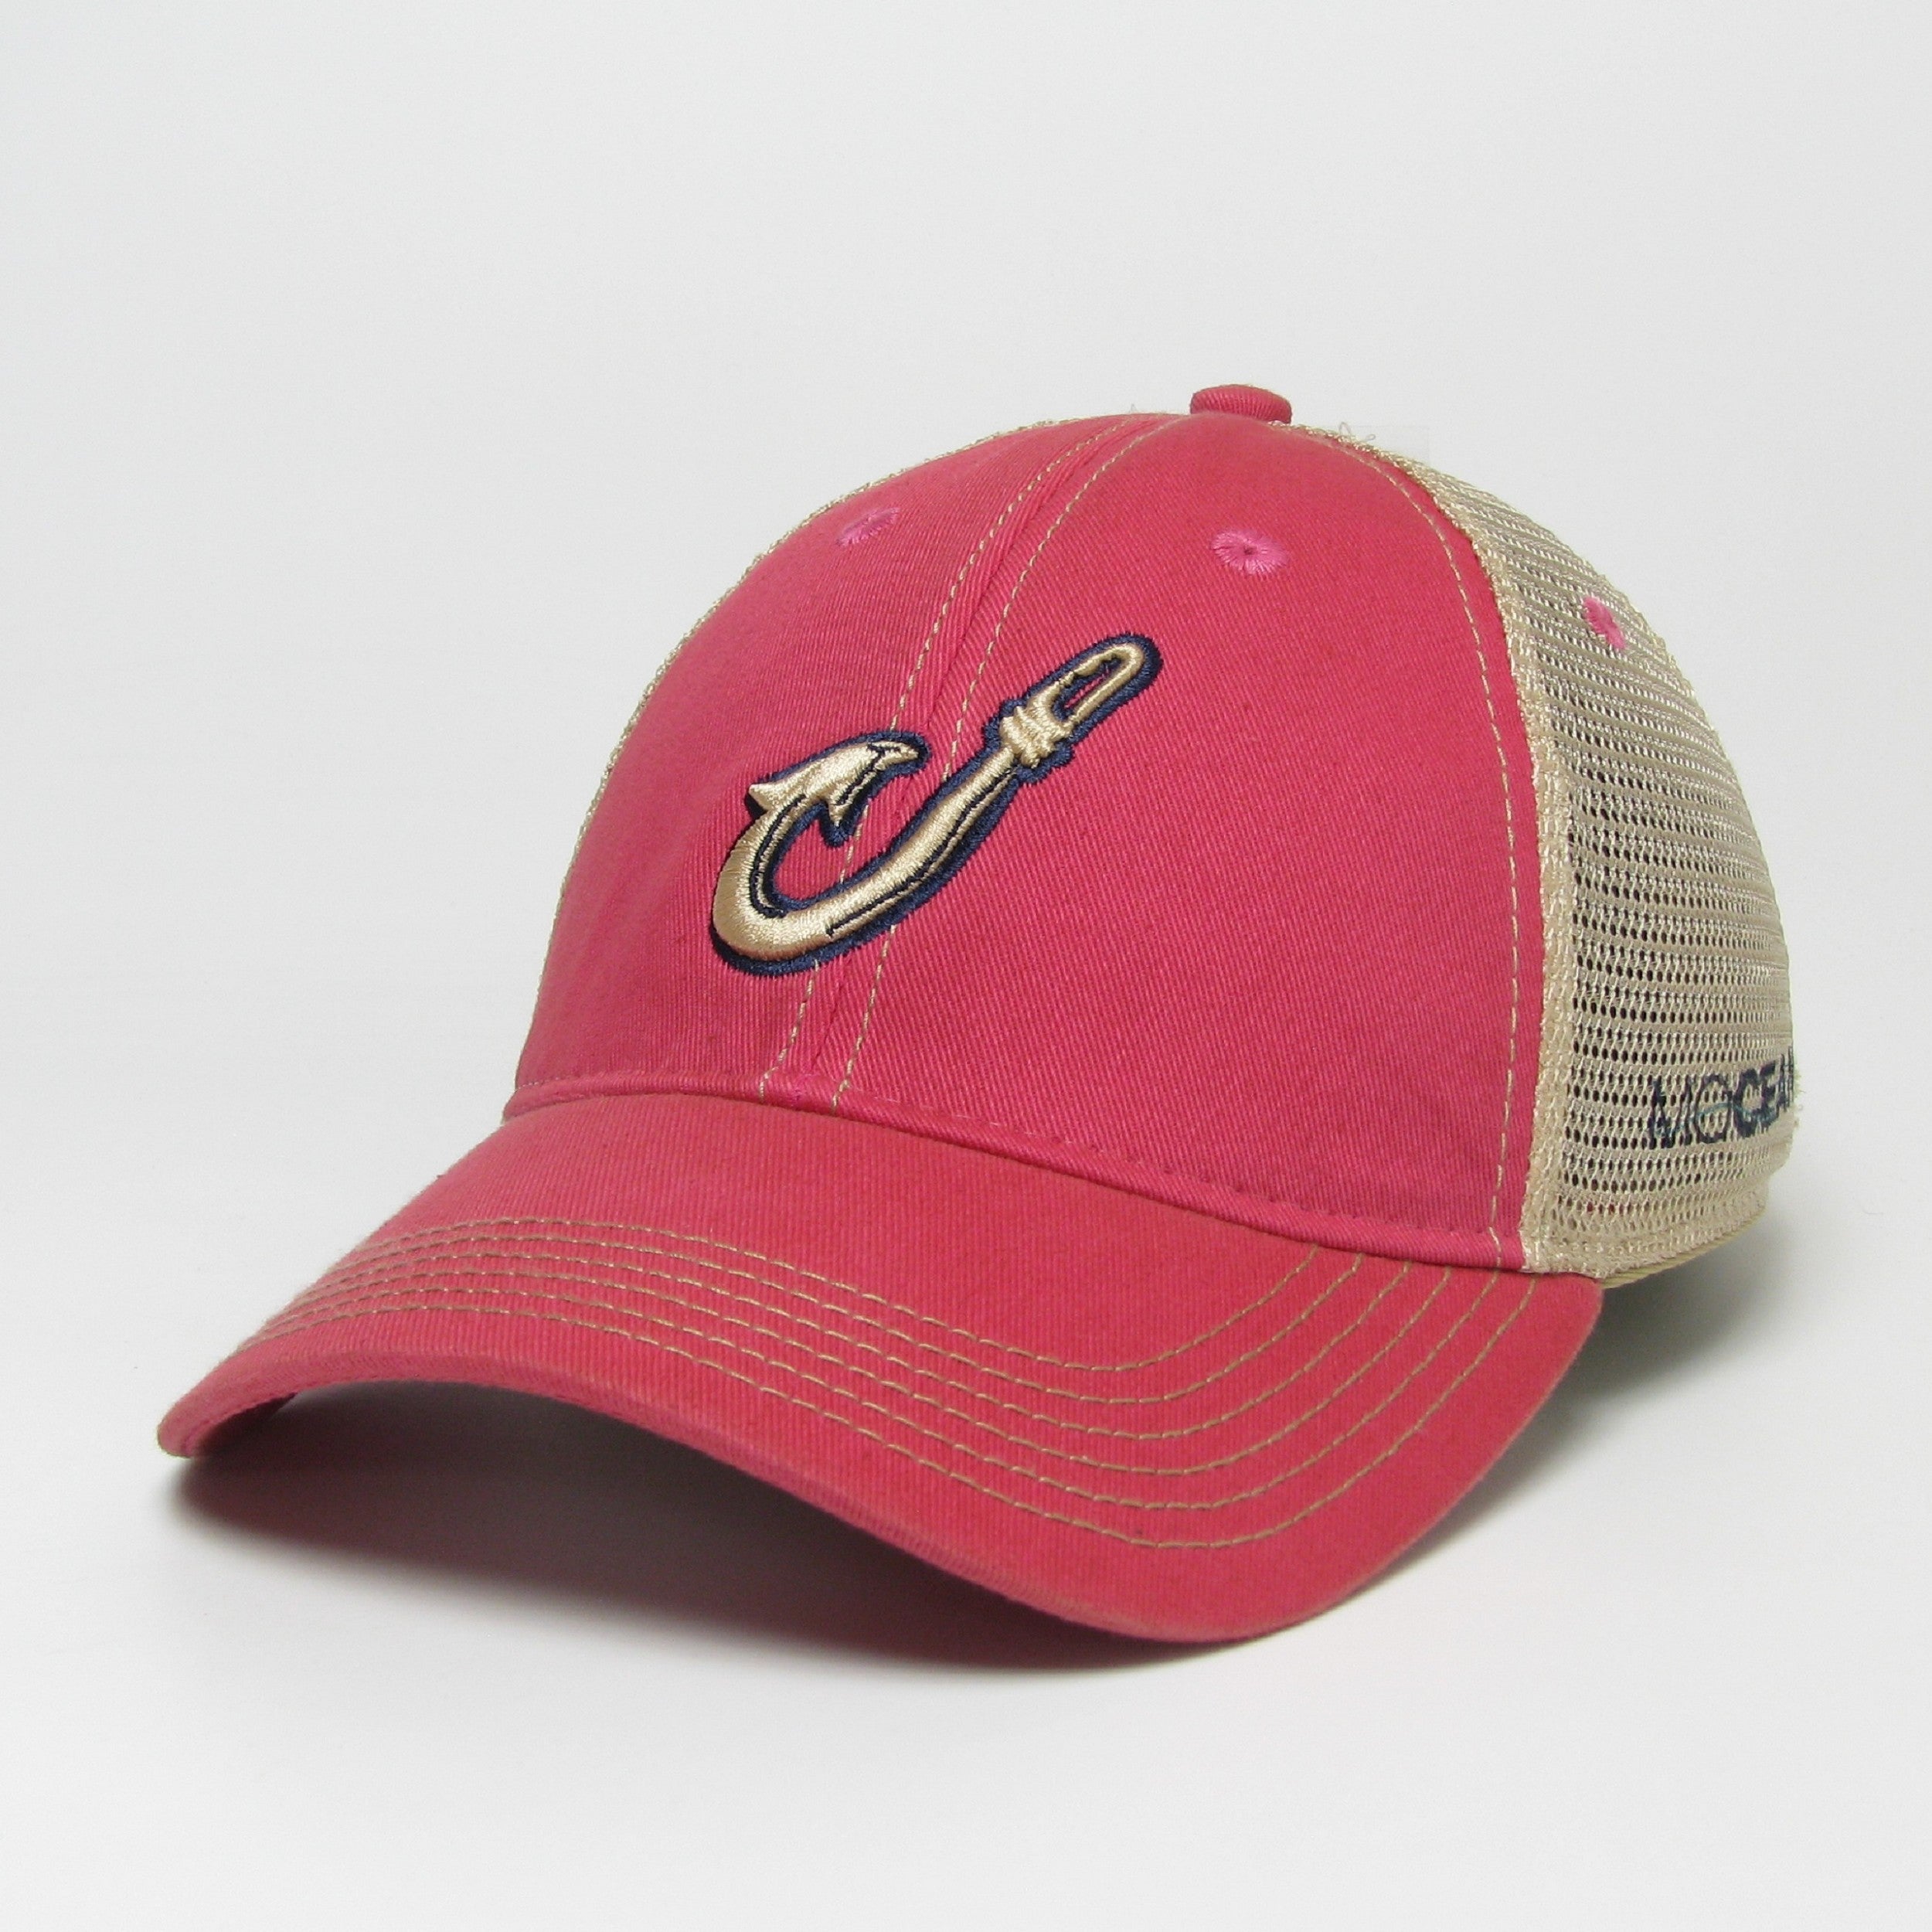 NJ (New Jersey) Baseball Cap Pink